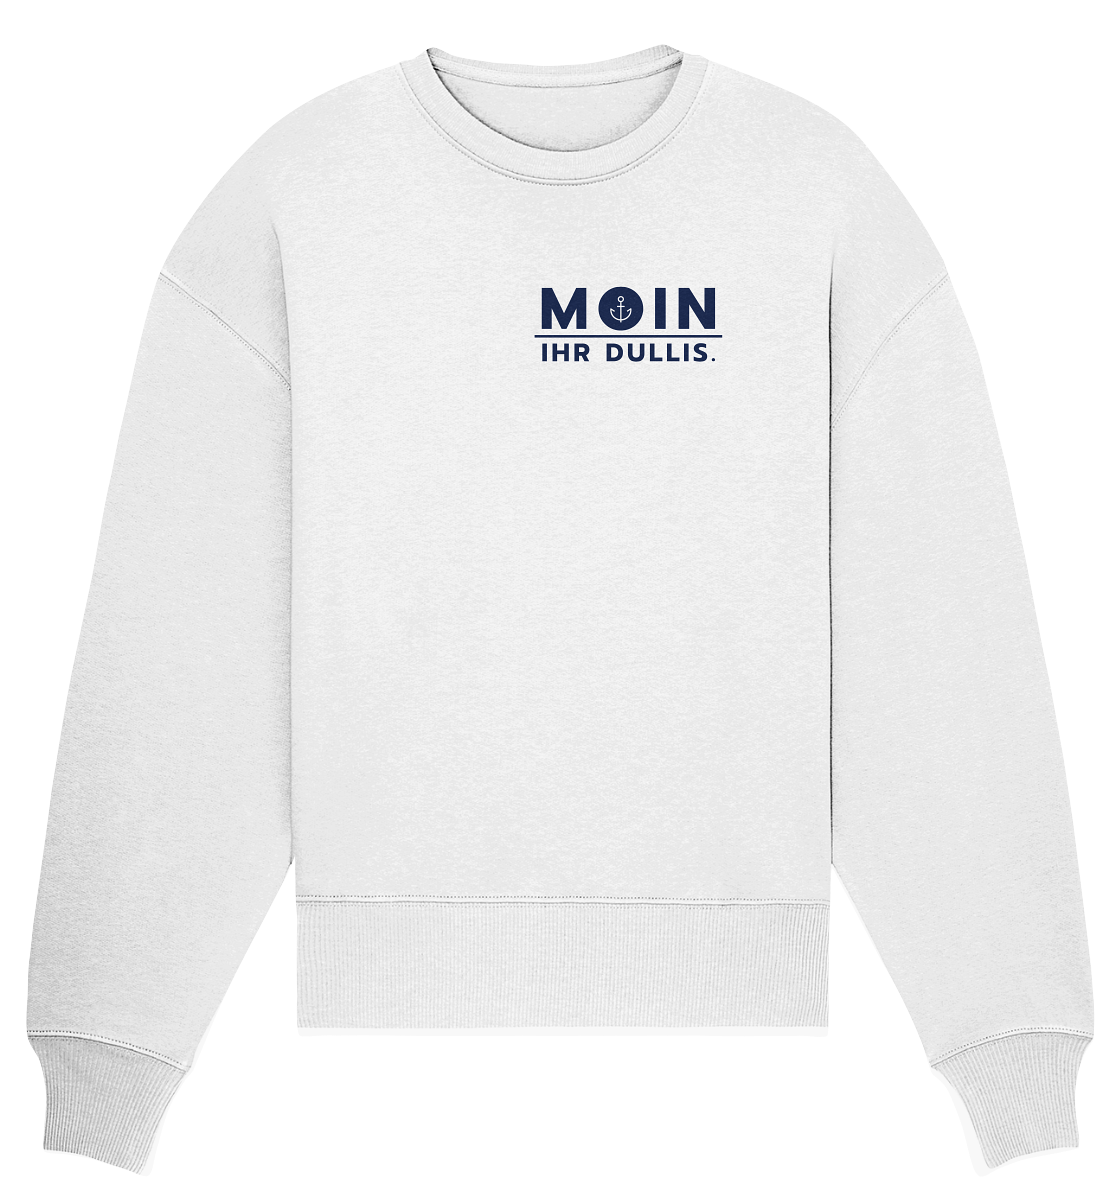 MOIN IHR DULLIS. - Organic Oversize Sweatshirt